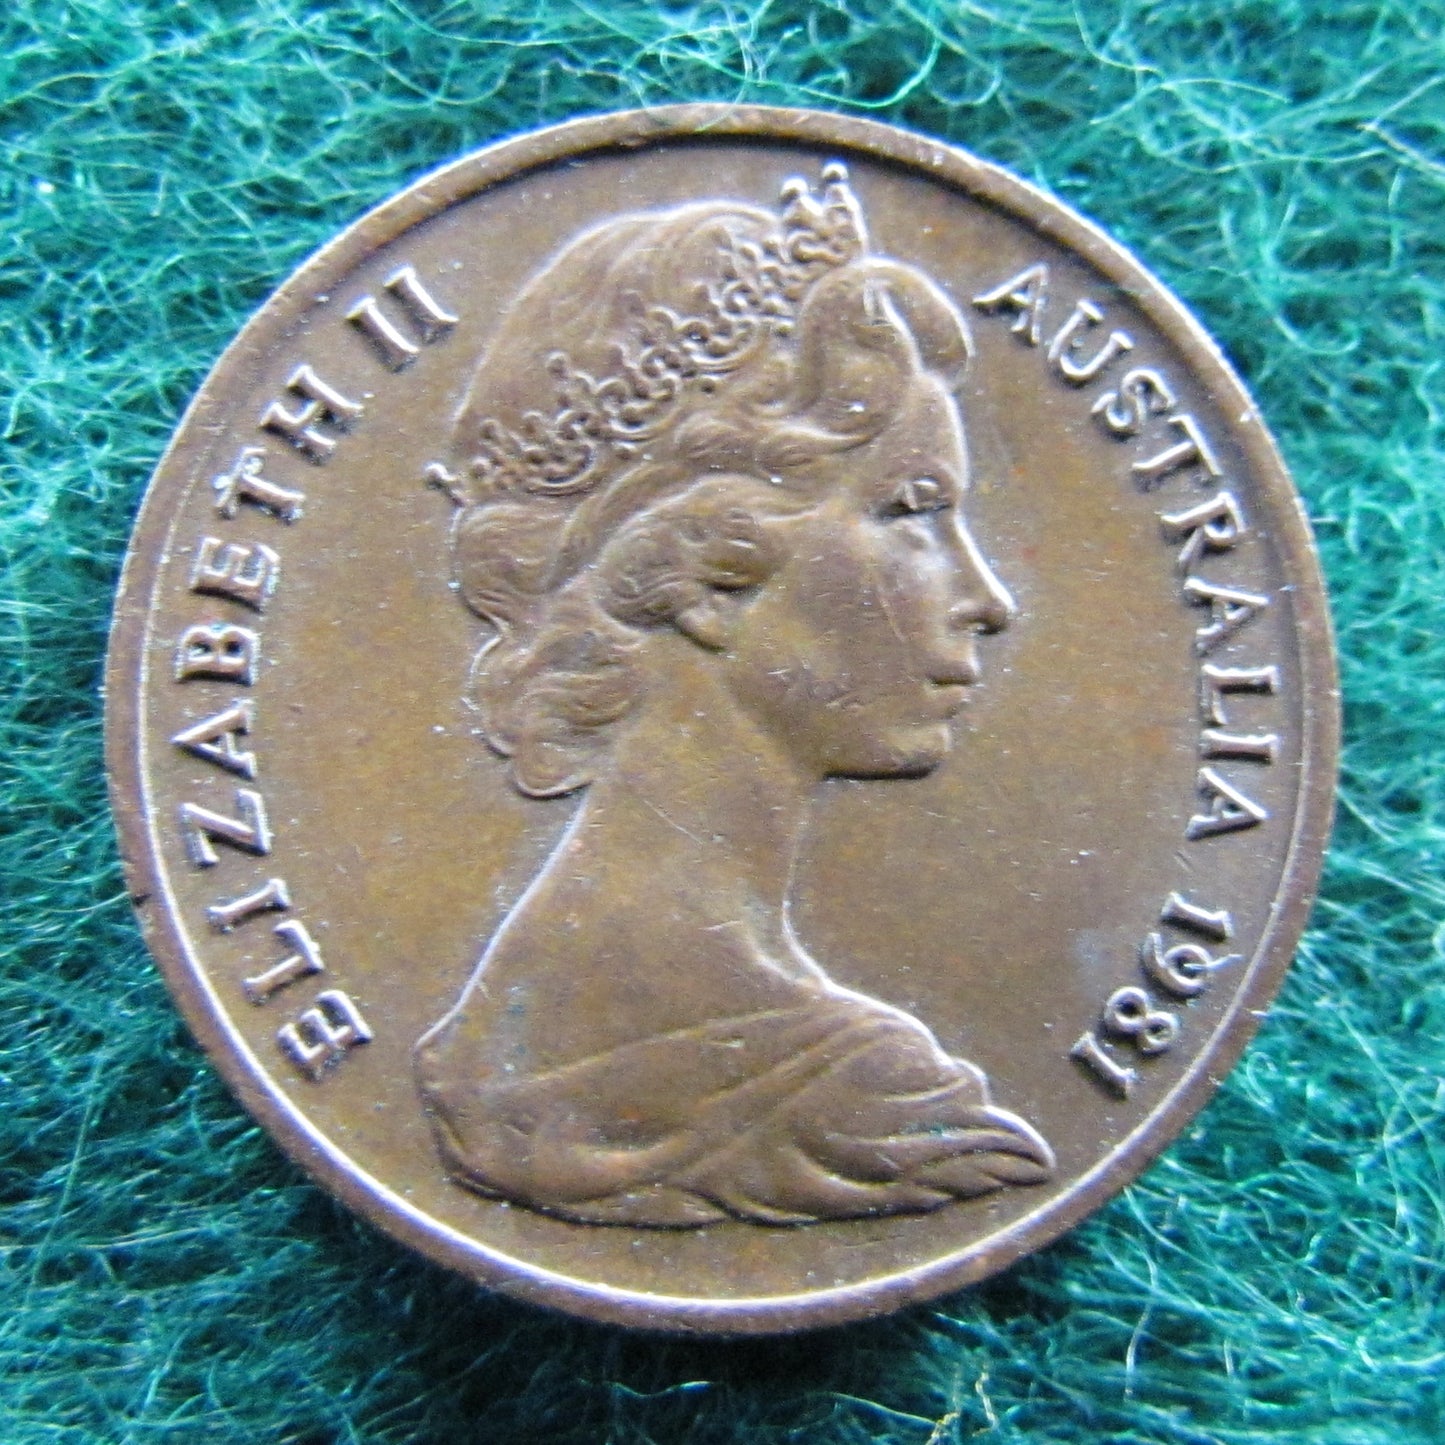 Australian 1981 1 Cent Queen Elizabeth Coin